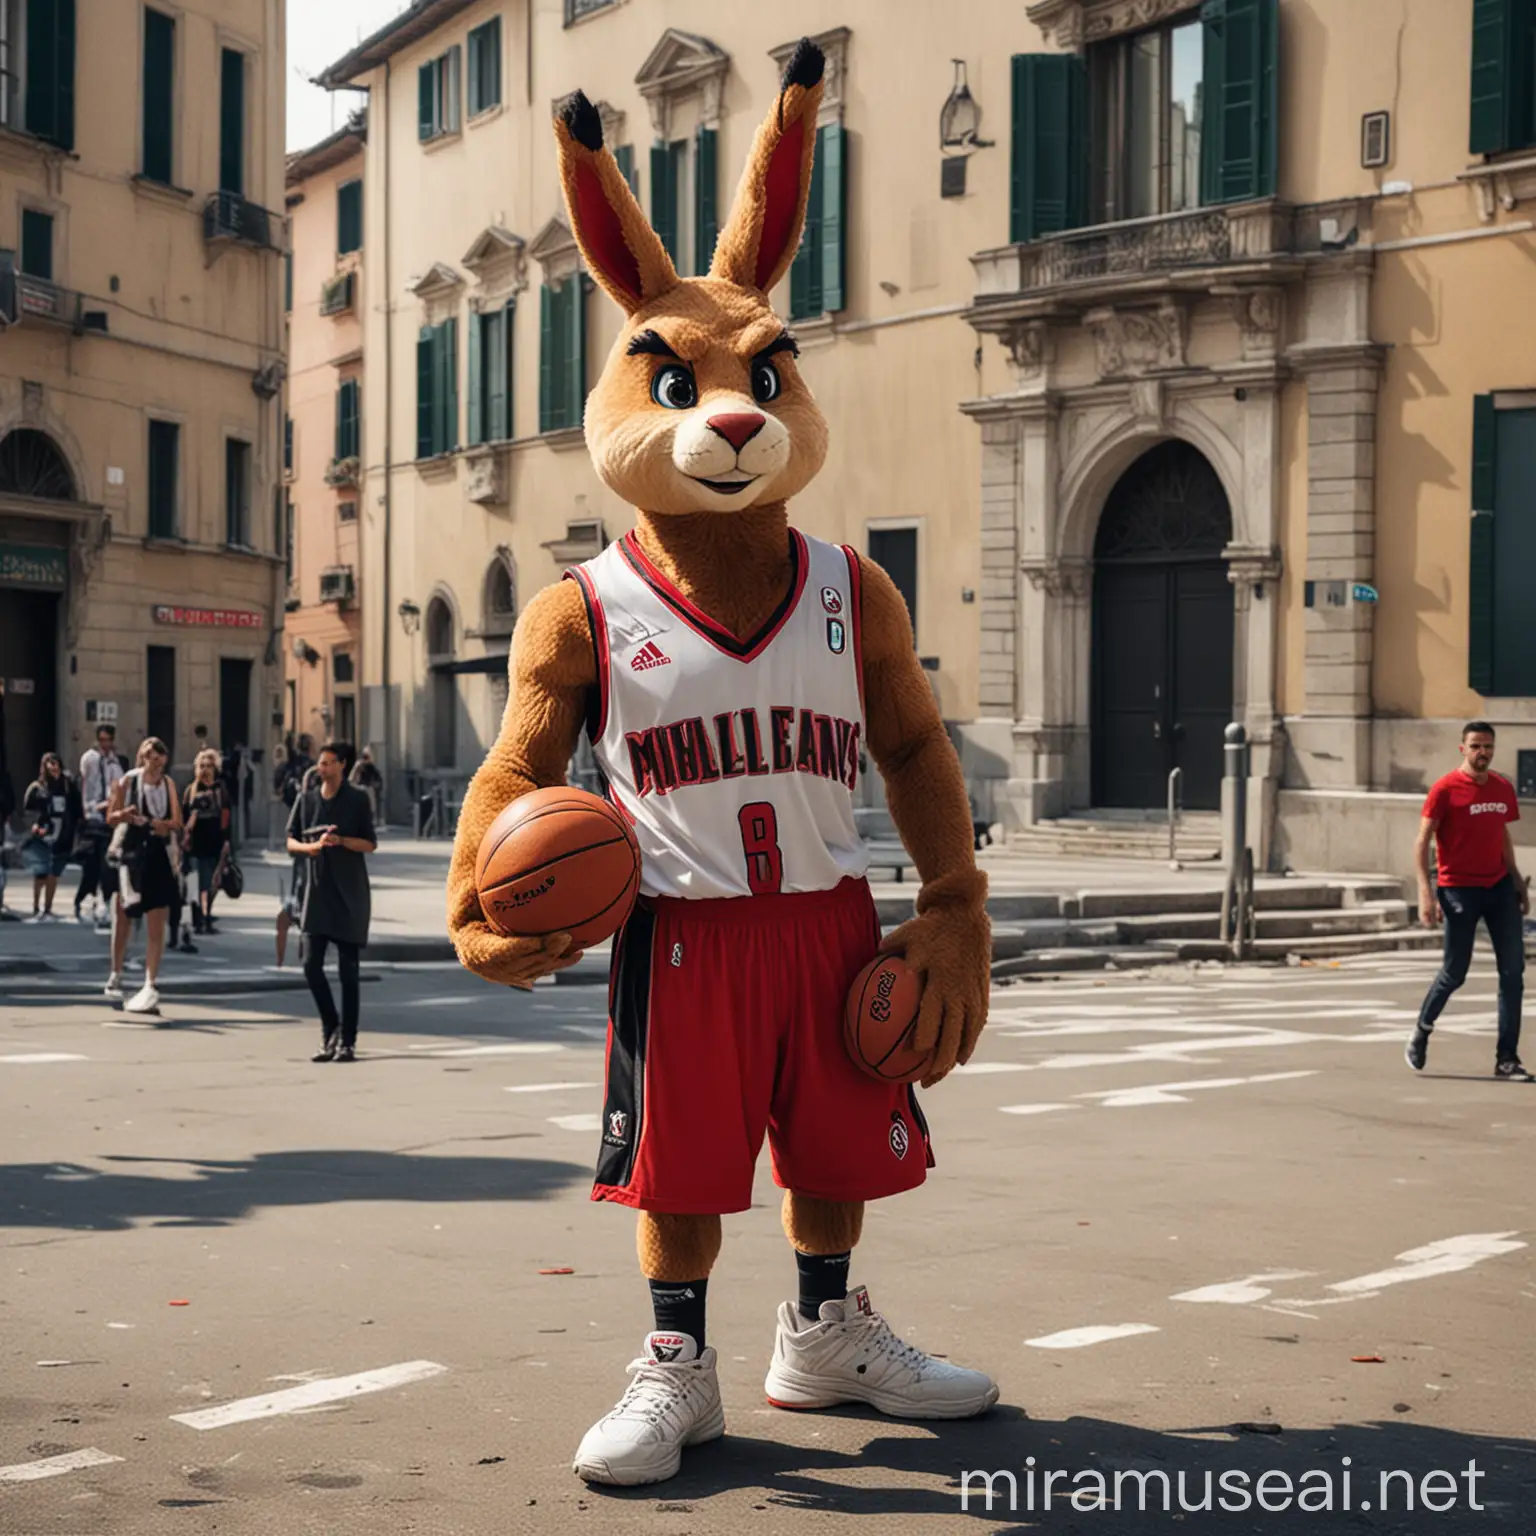 Milan Basketball Mascot Energetic and Spirited Team Representative